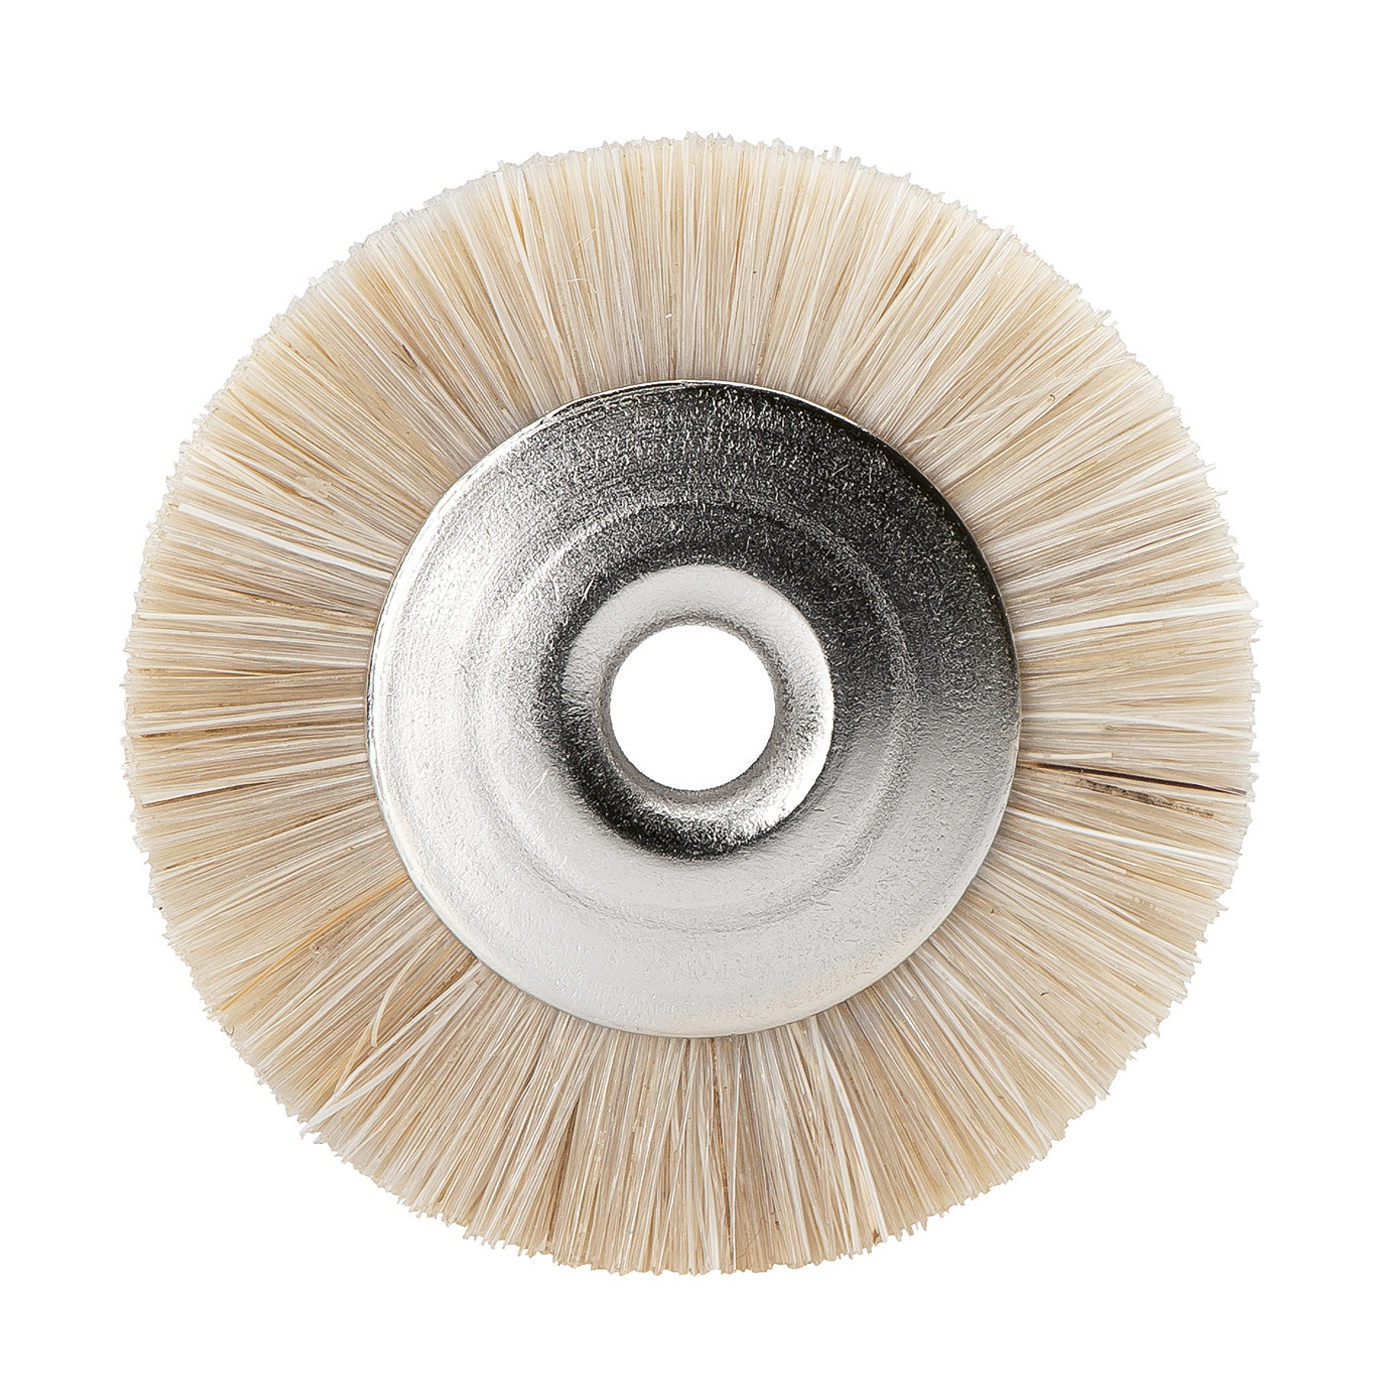 Mini Brushes, Wheels, Goat Hair, White, ø 17 mm - 12 pieces